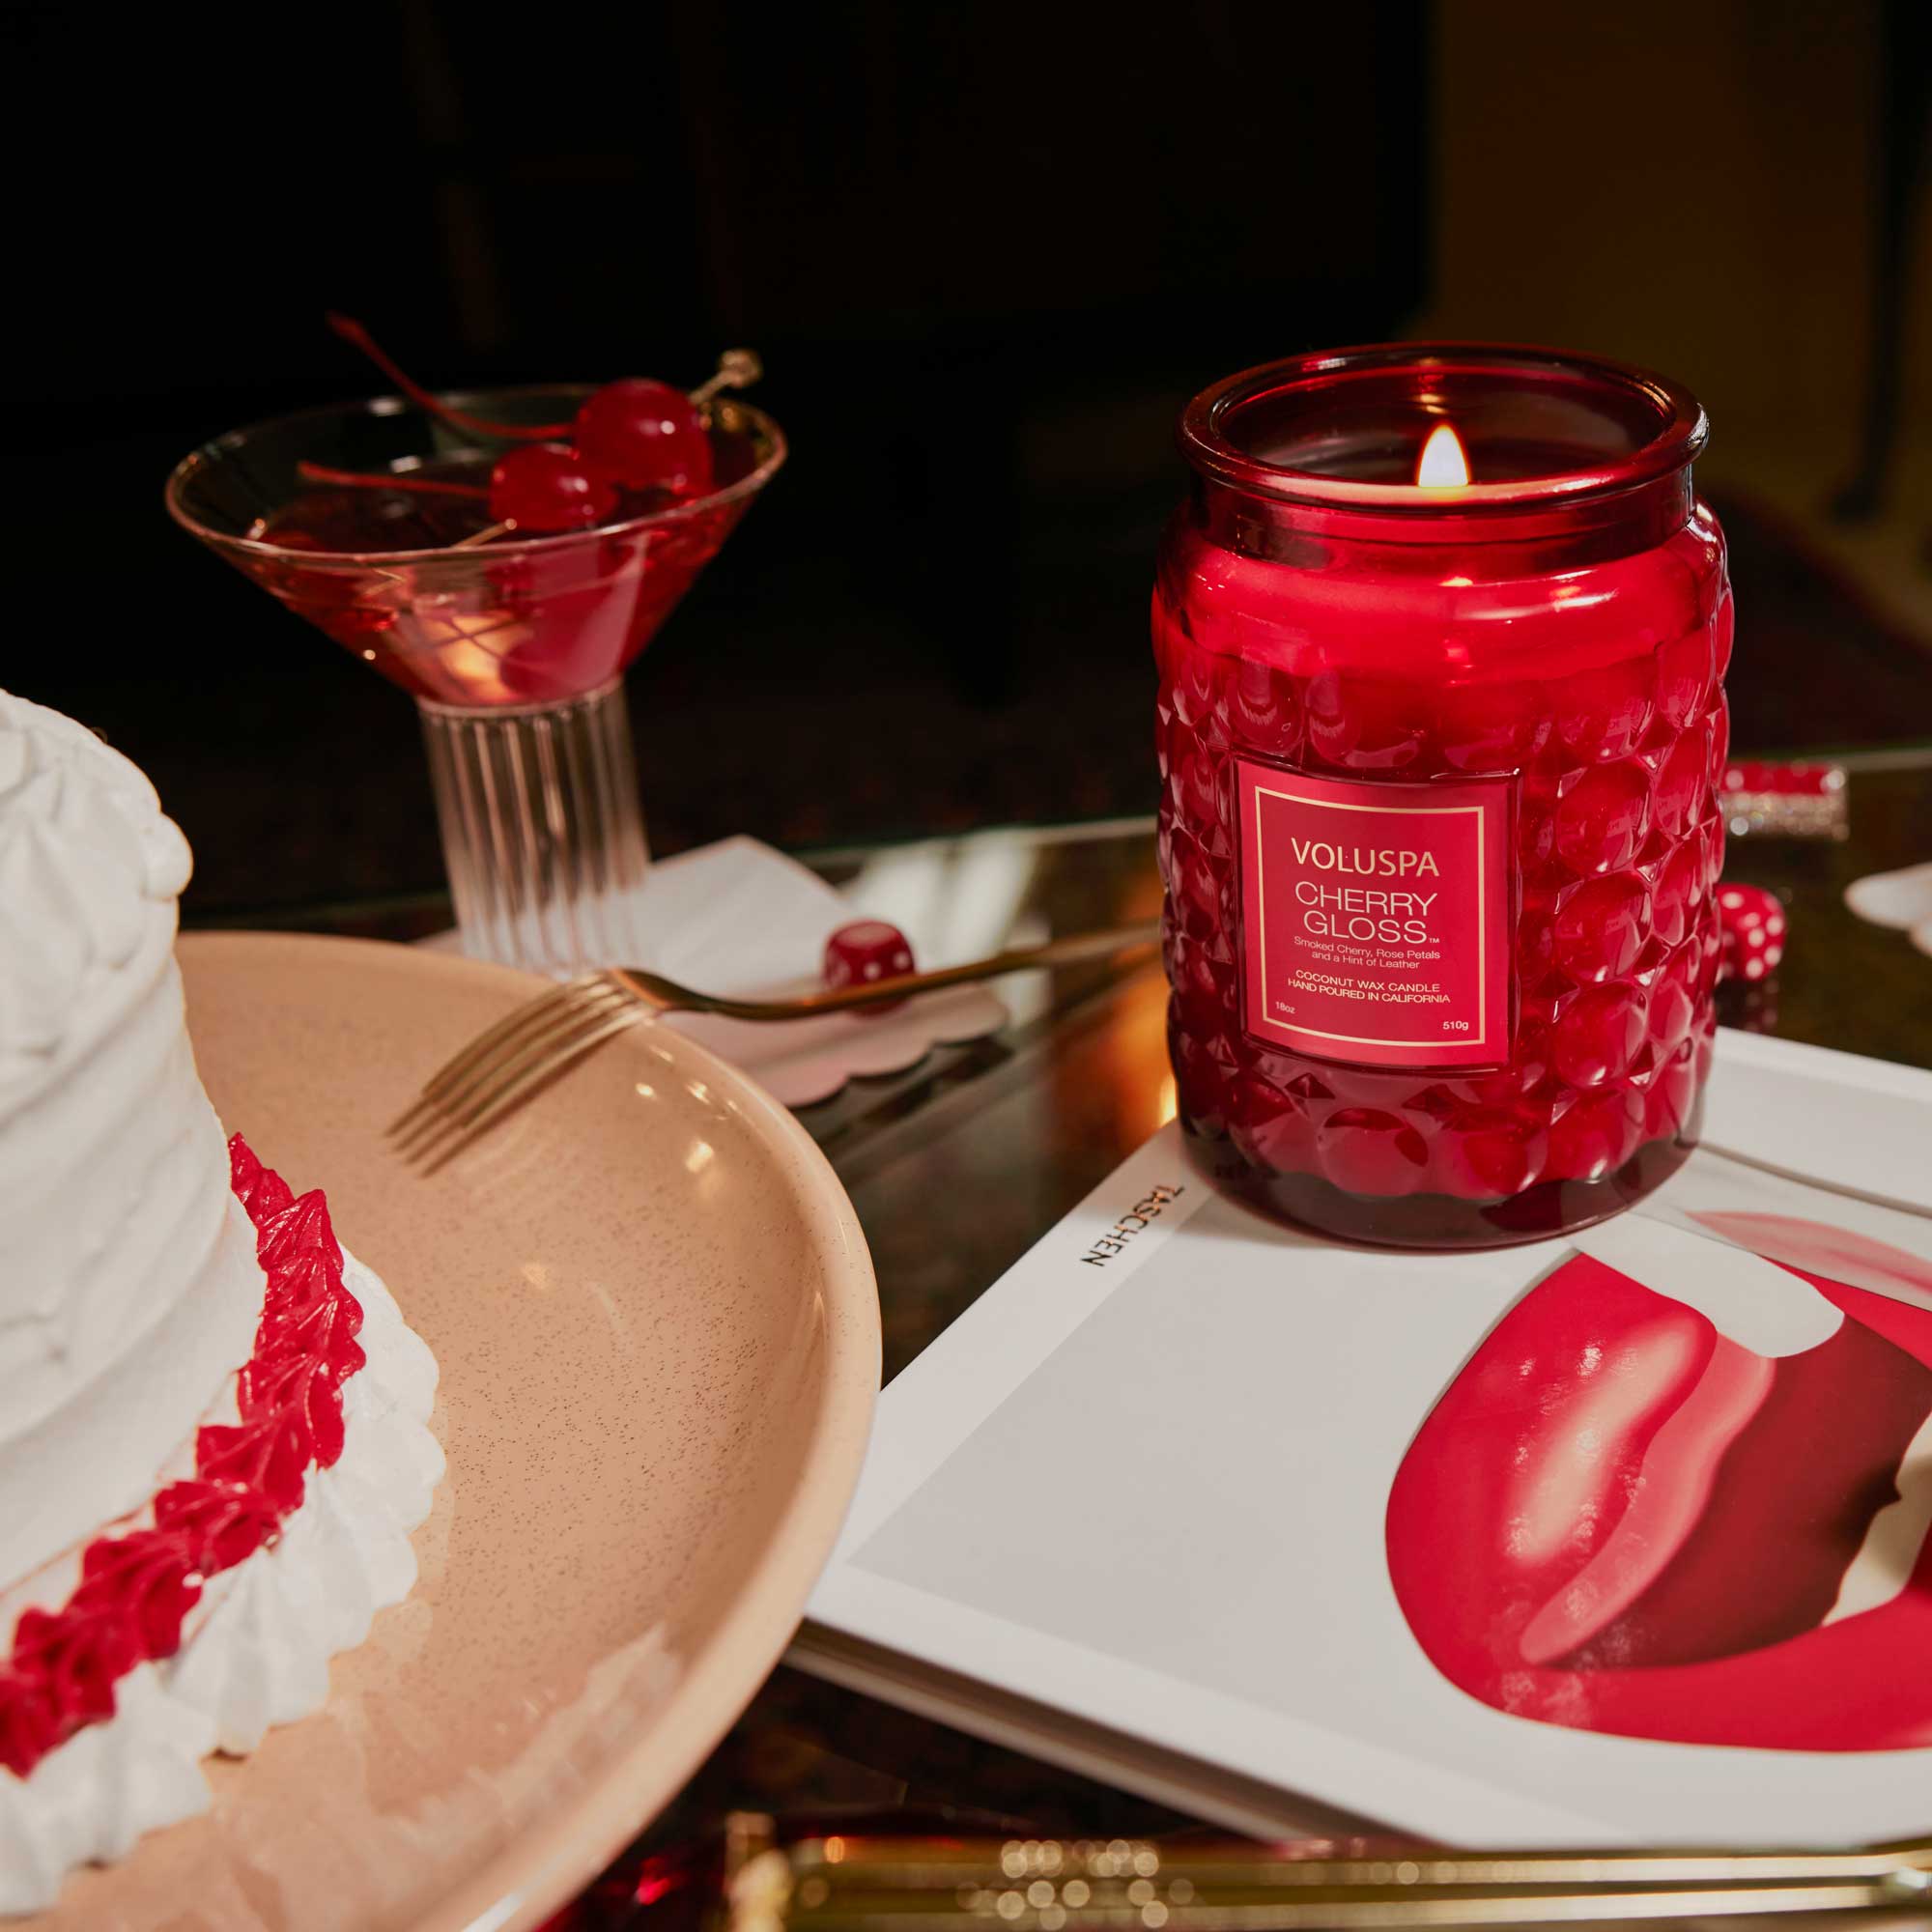 Cherry Gloss - Large Jar Candle